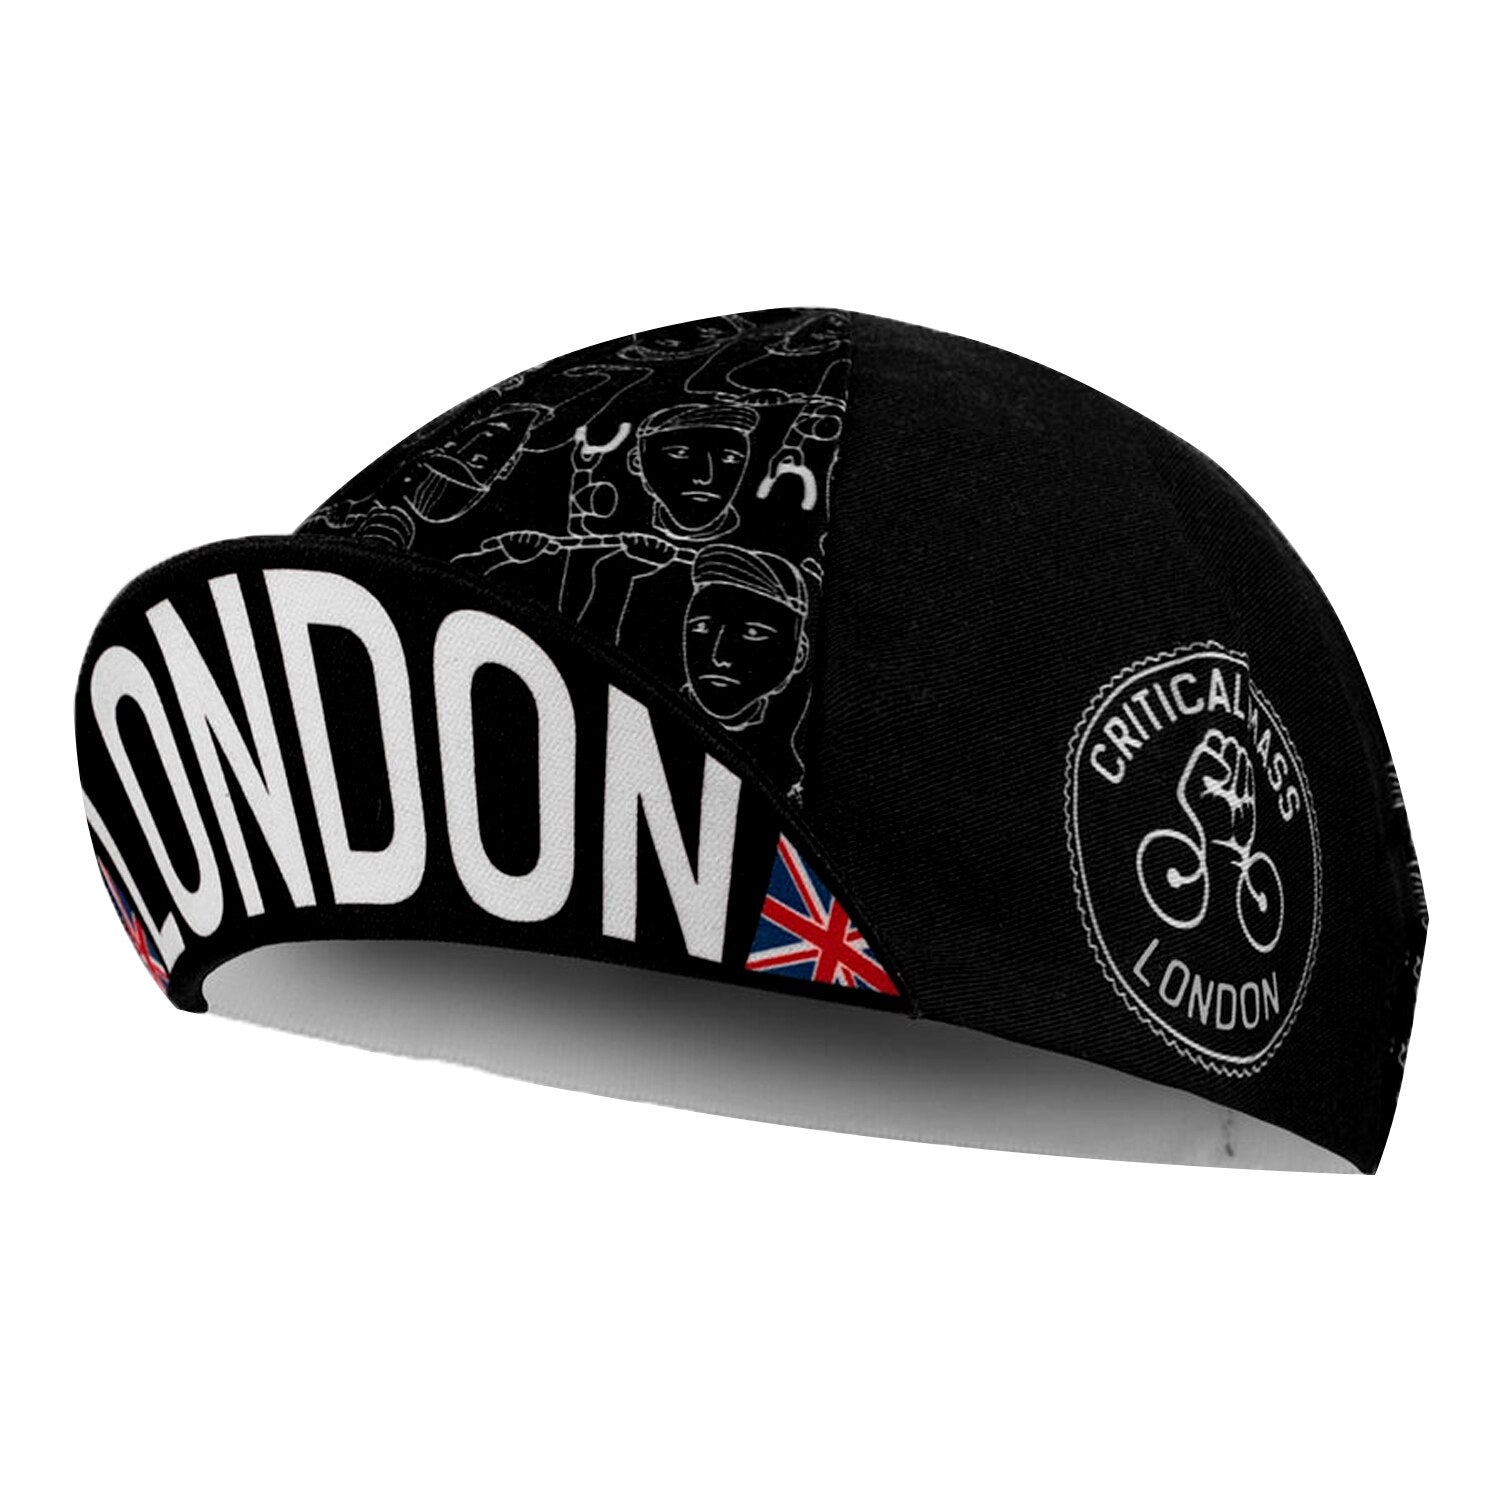 London CYCLING CAP